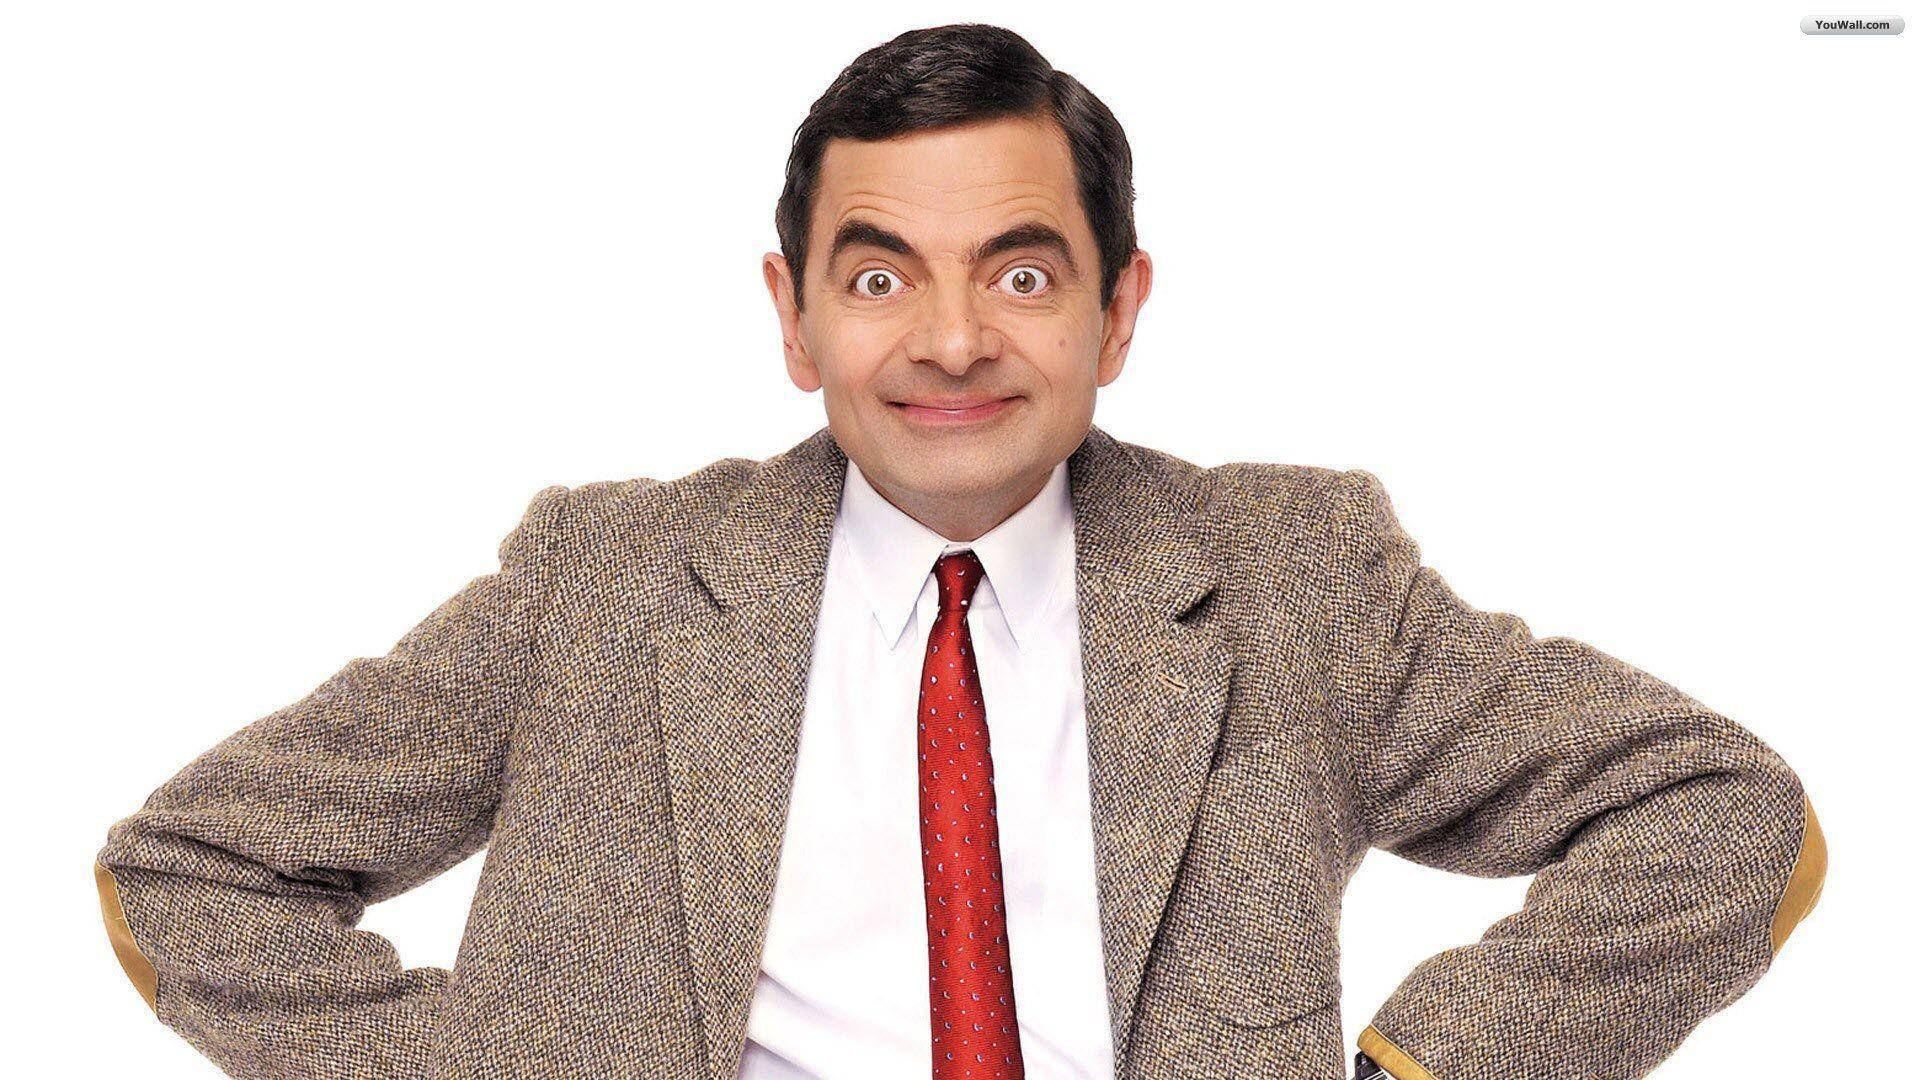 Mr. Bean Hip Pose Wallpaper